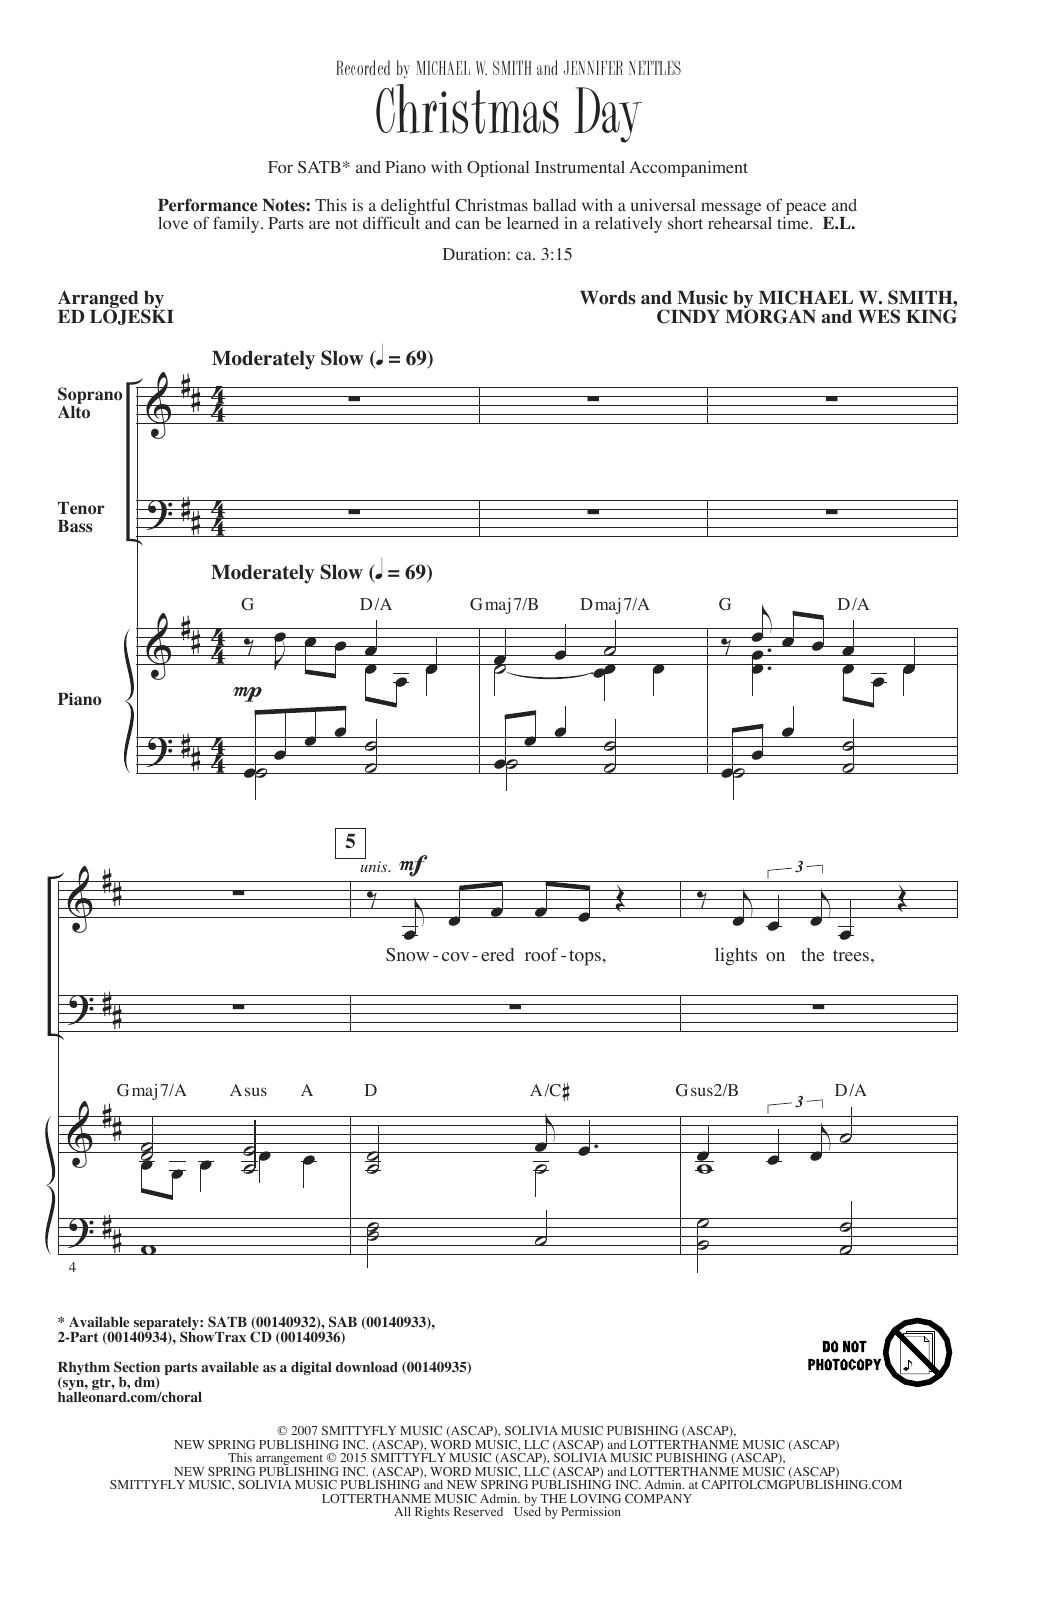 Ed Lojeski Christmas Day sheet music notes and chords arranged for SAB Choir